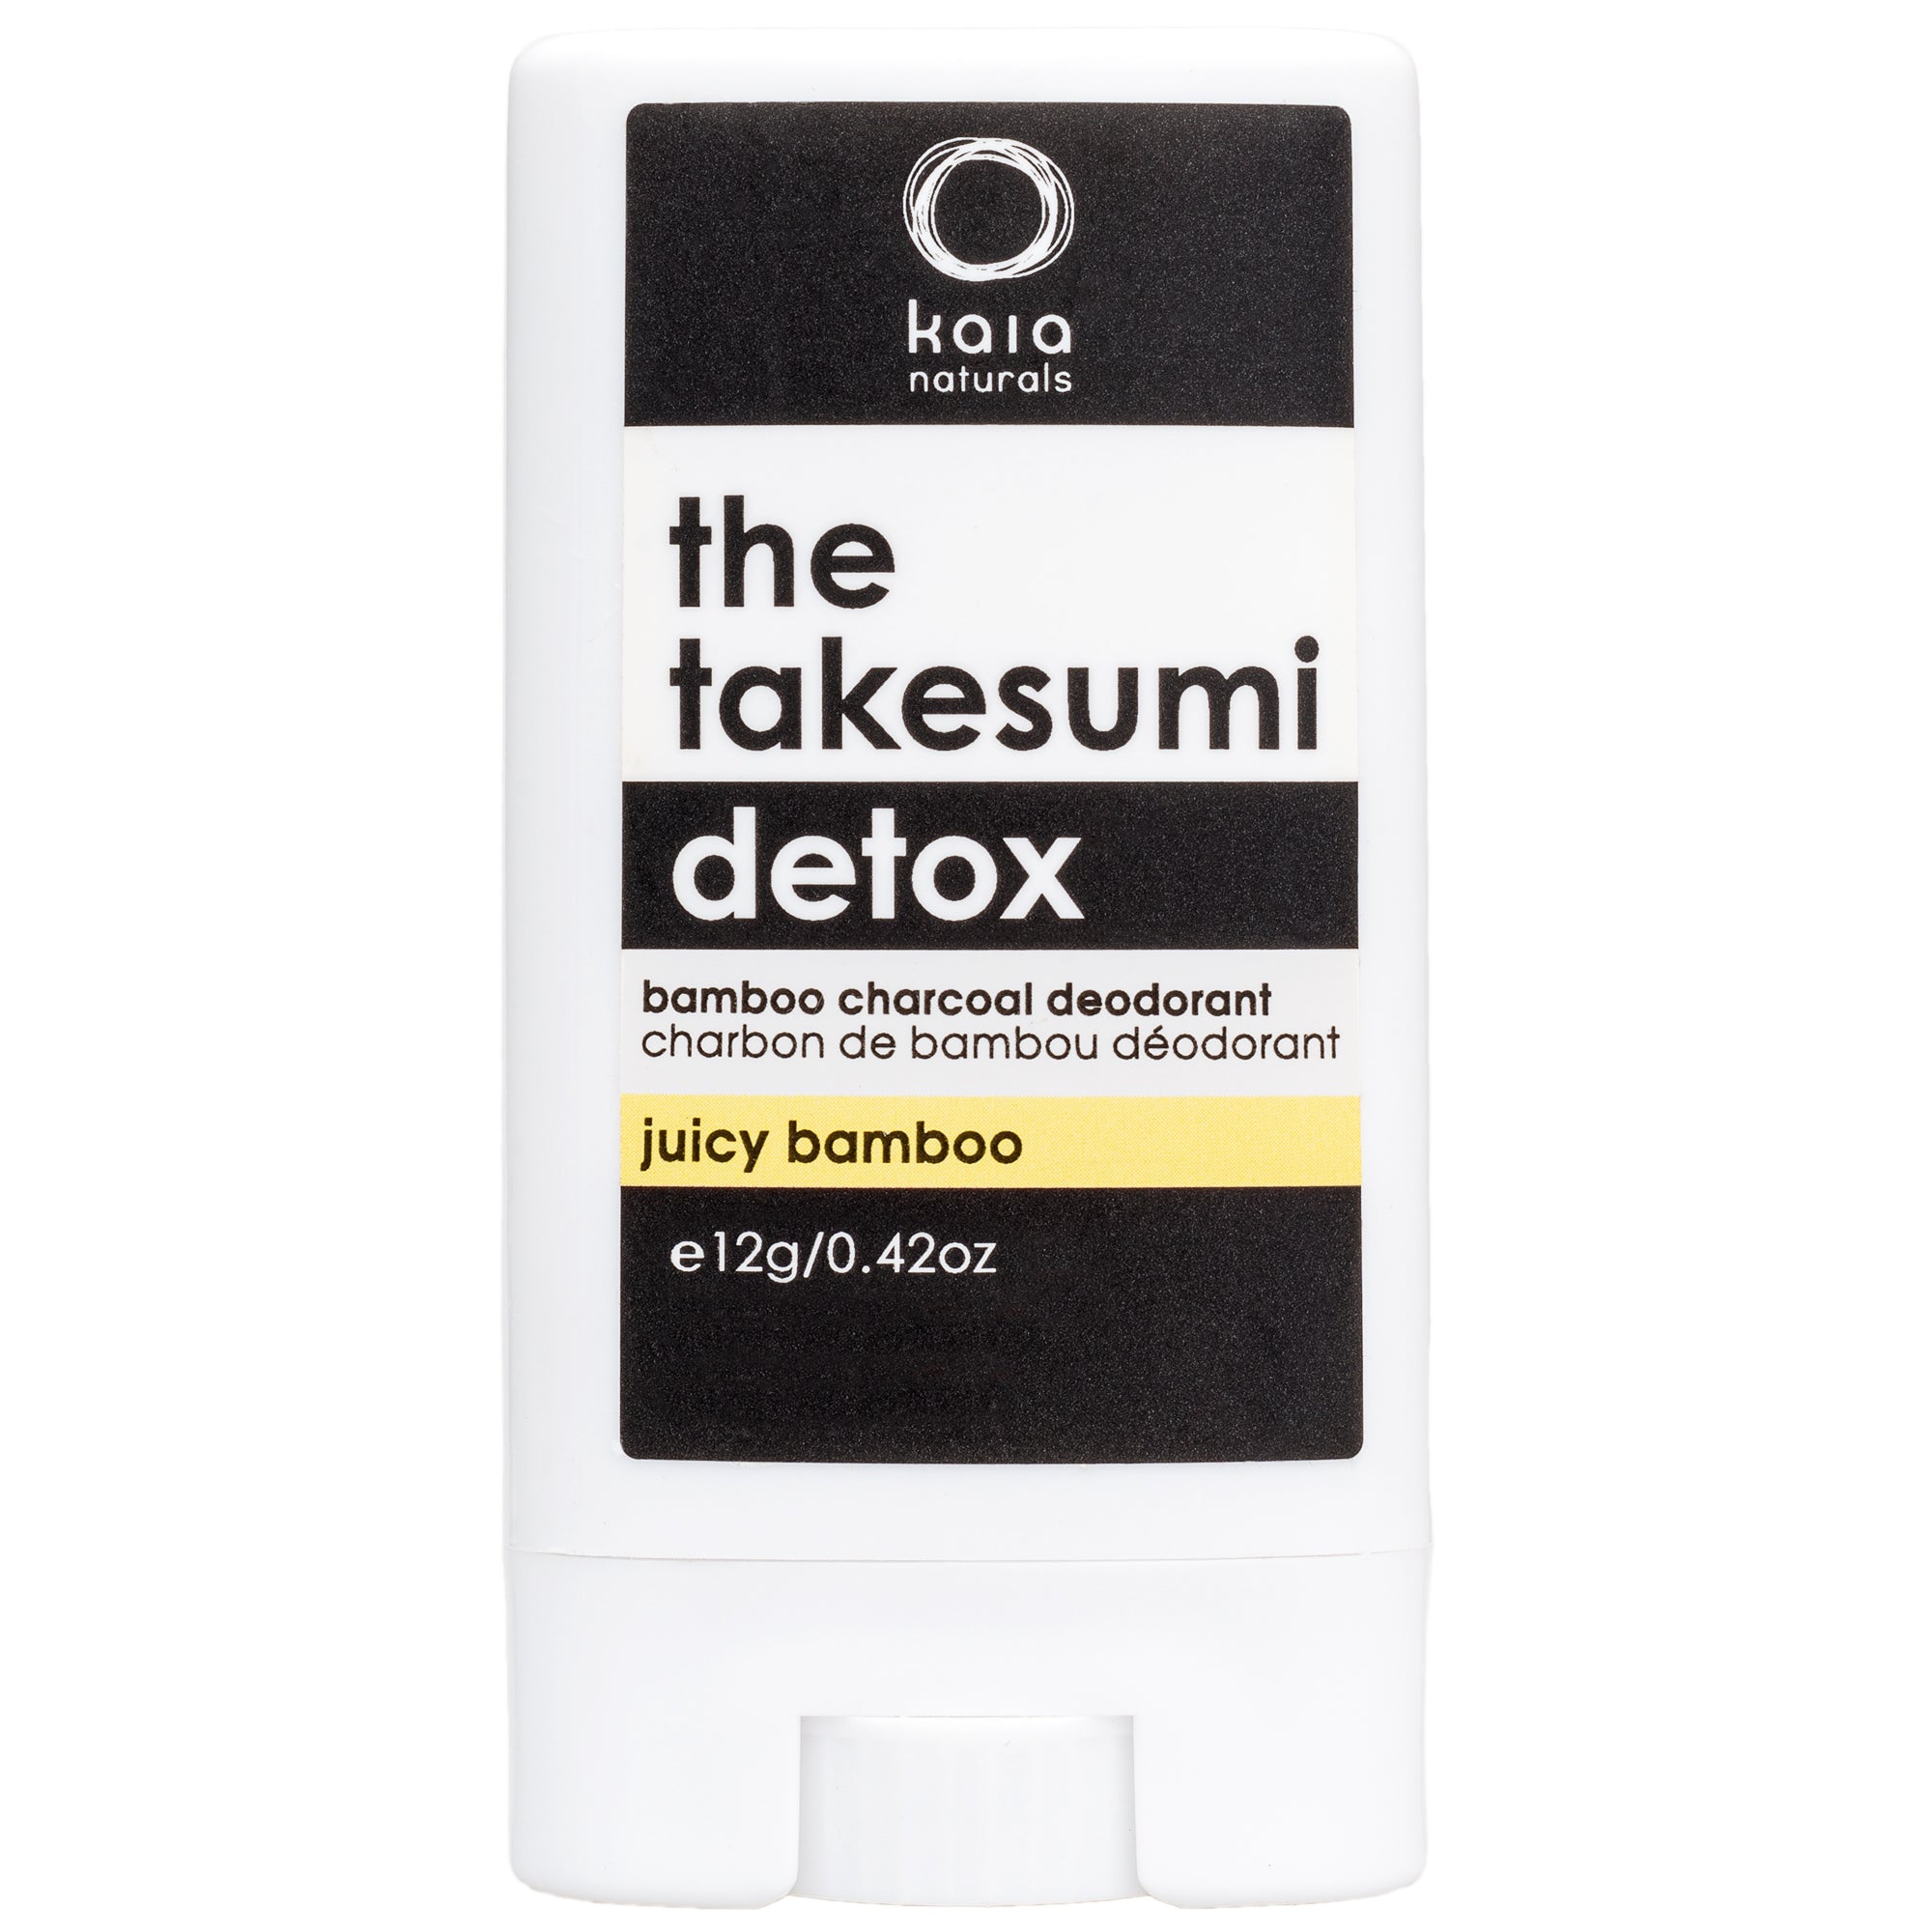 The Takesumi Detox Charcoal Deodorant and Detox Juicy Bamboo - Travel